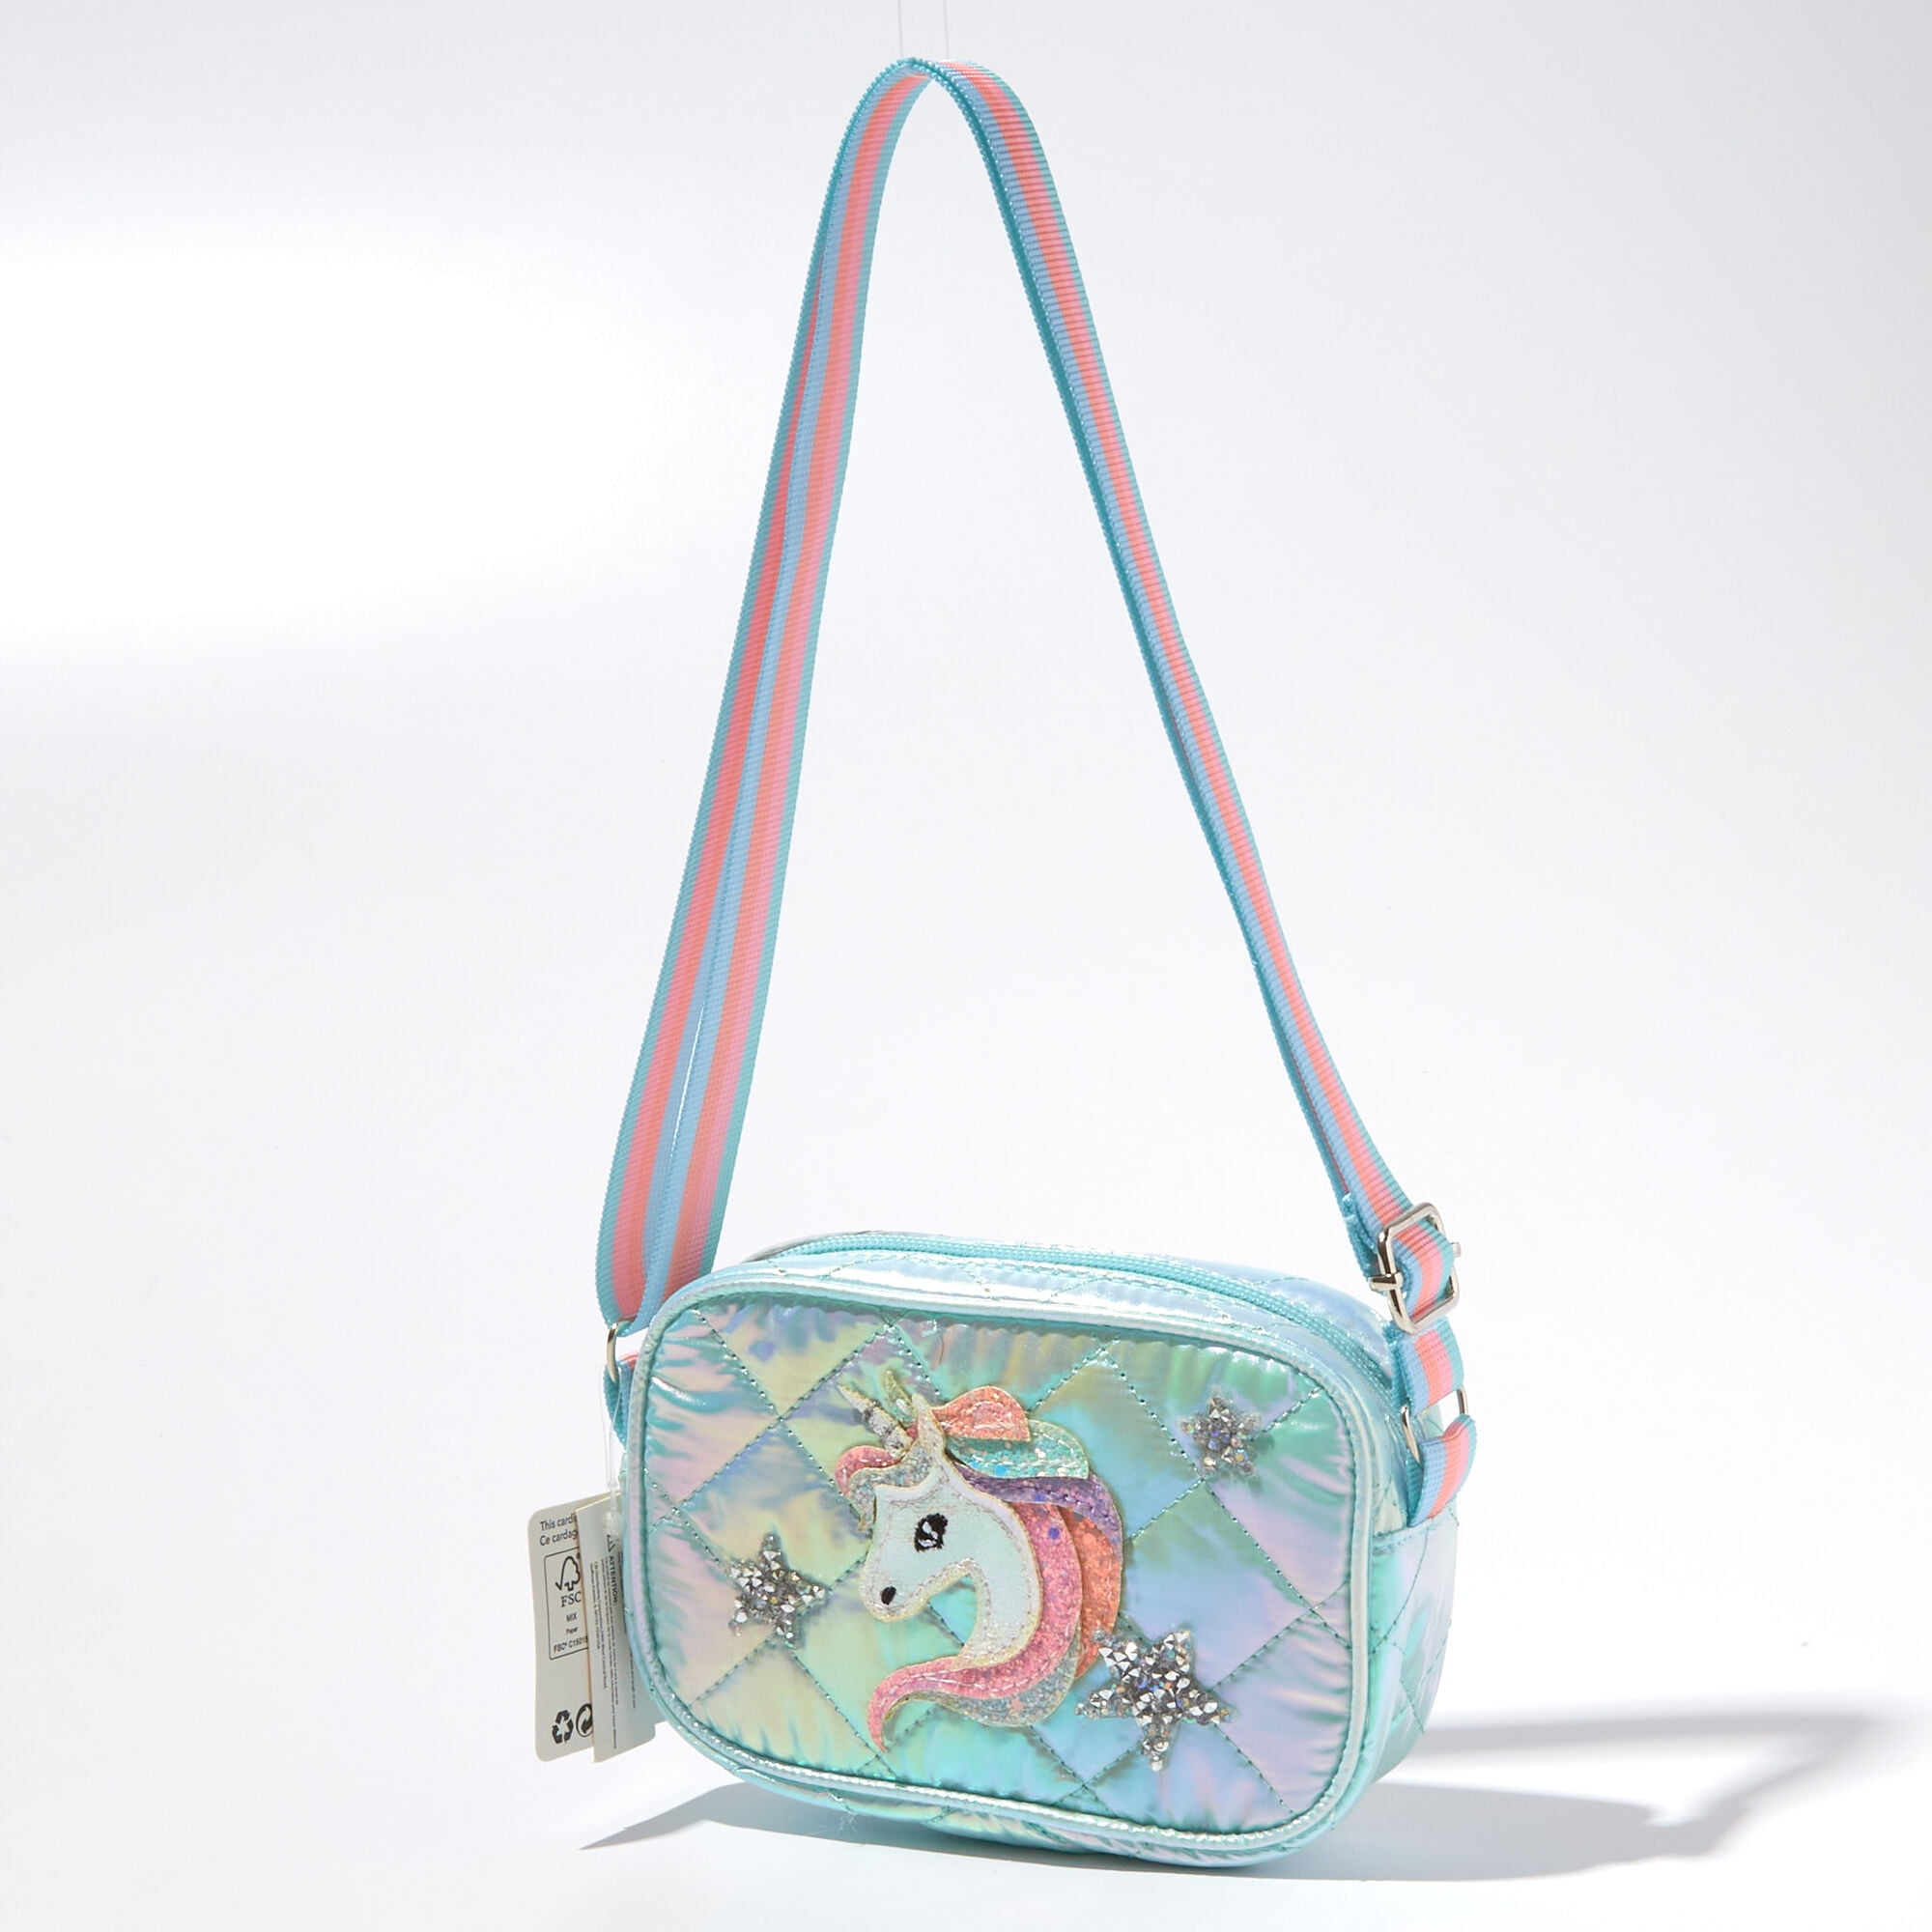 Claire's Girls Teen Unicorn Crossbody Bag, Mint Green, 98698 - Walmart.com